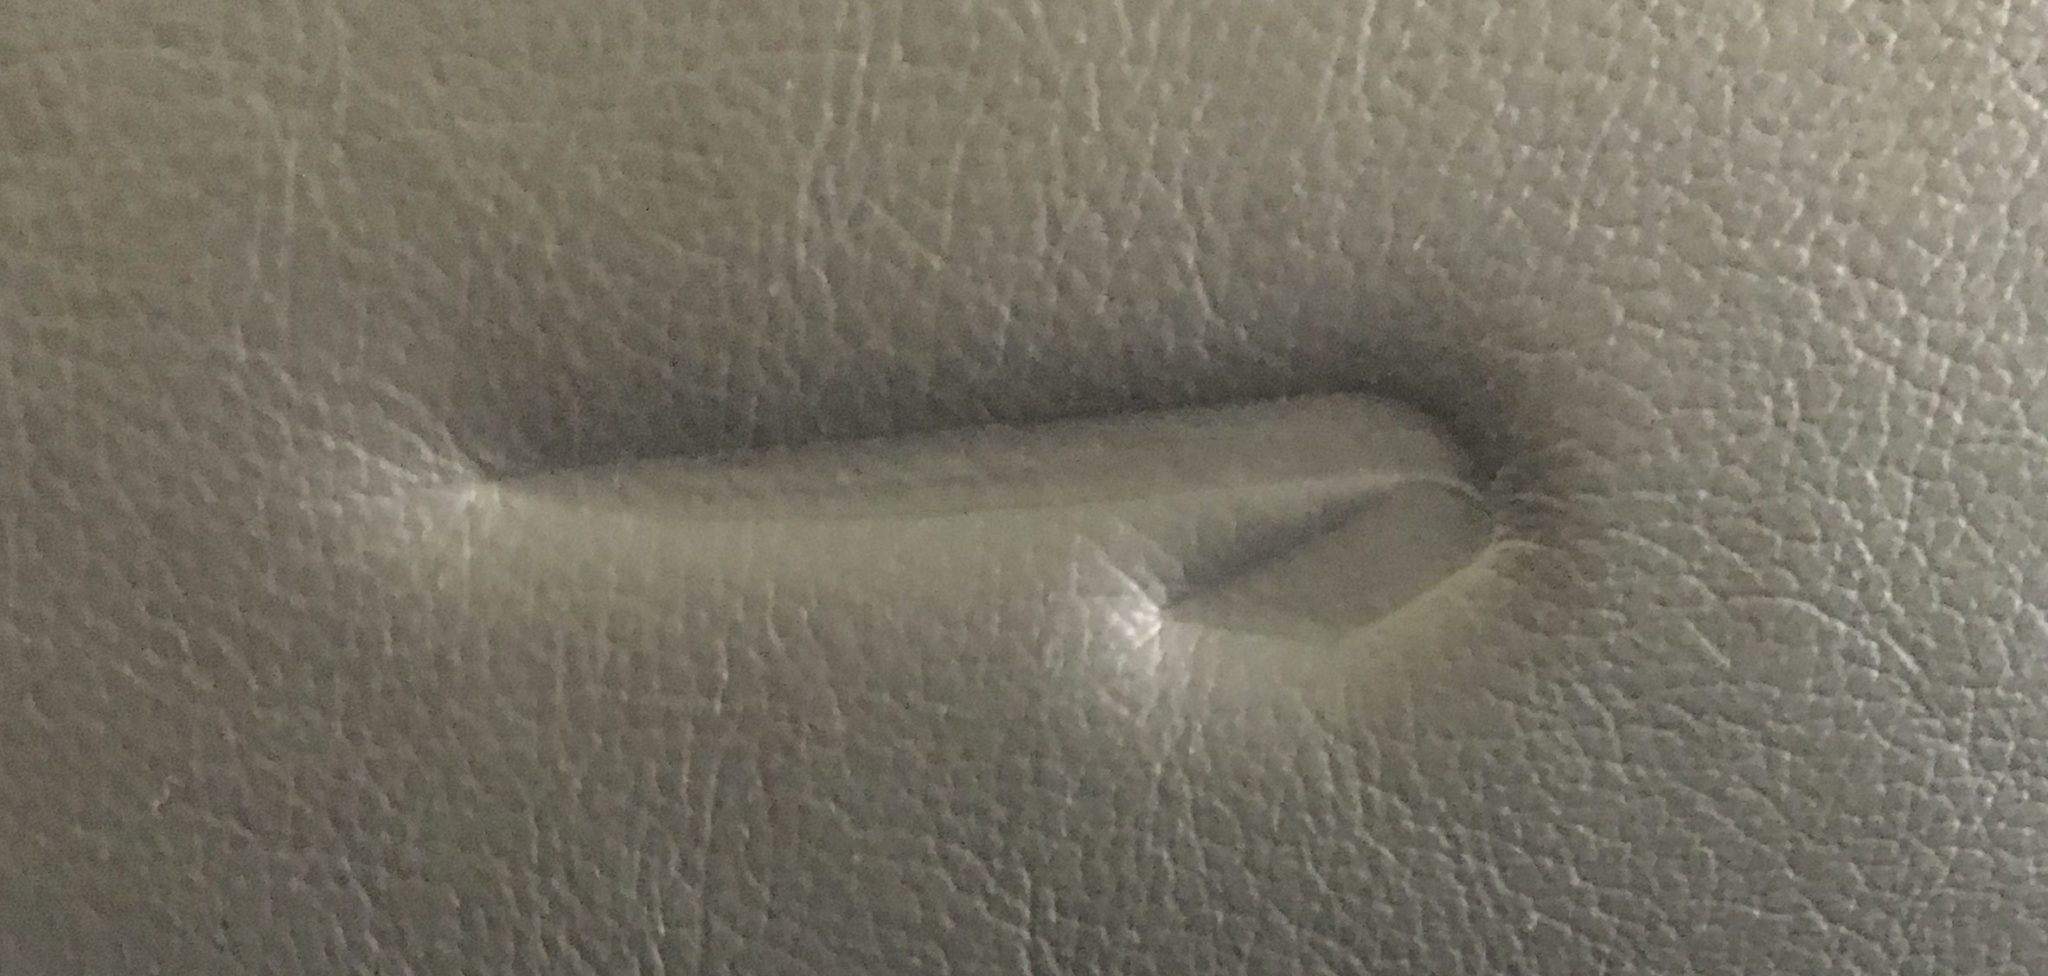 British Airways logo in a leather aeroplane seat